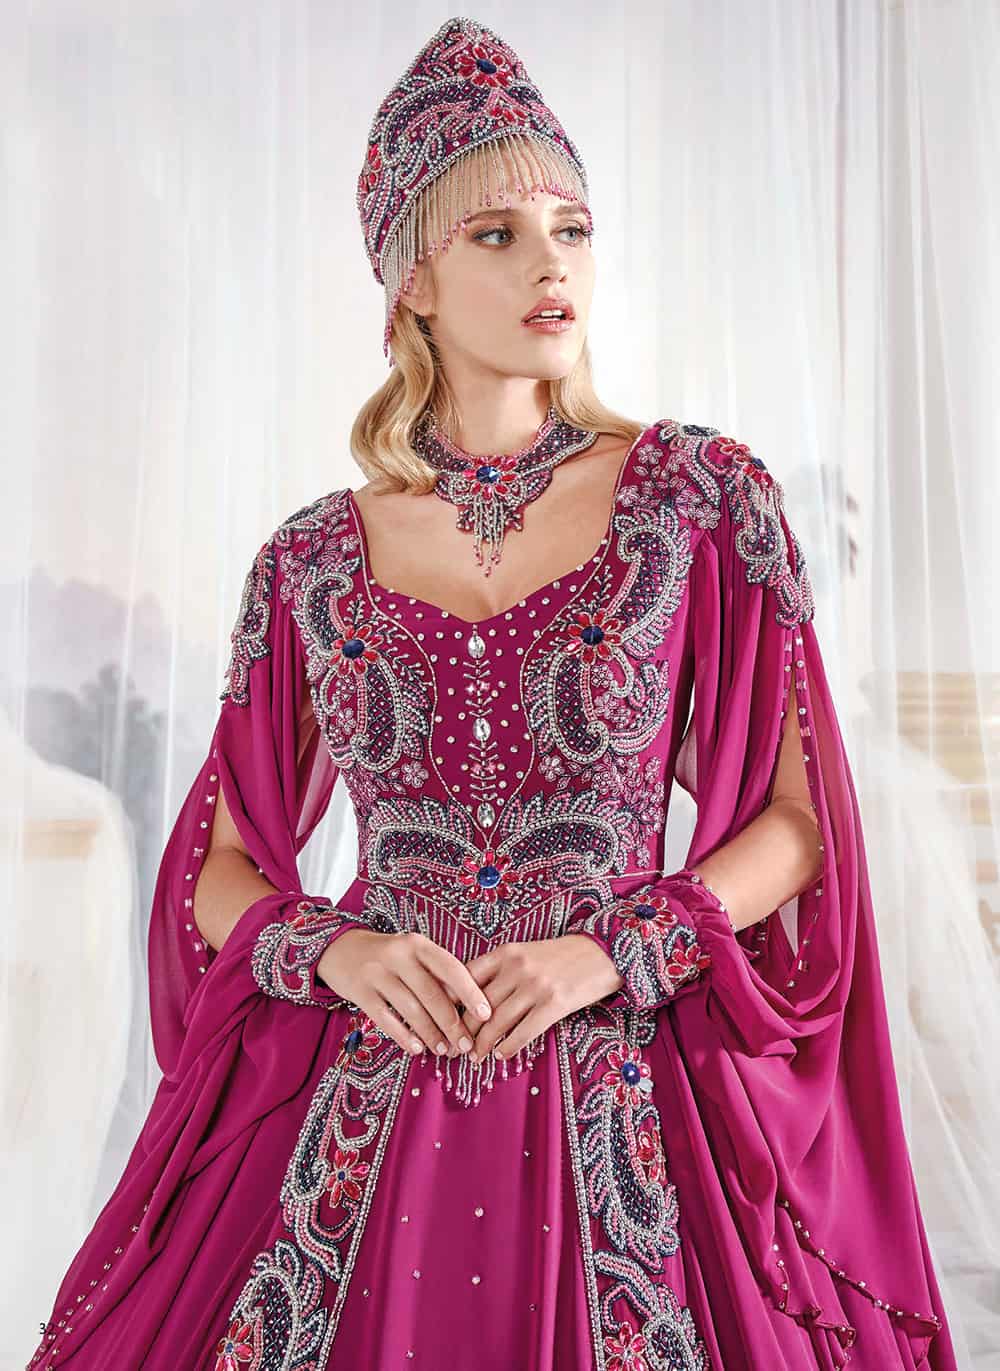 Ottoman-Turkish-Wedding-Dress-Online-Shopping-Muslim-Dress-Evening-Dress-Plus-Size--Custom-Made-Lace-appliques-Long-Sleeves-Prom-Dress-Ball-Gown-